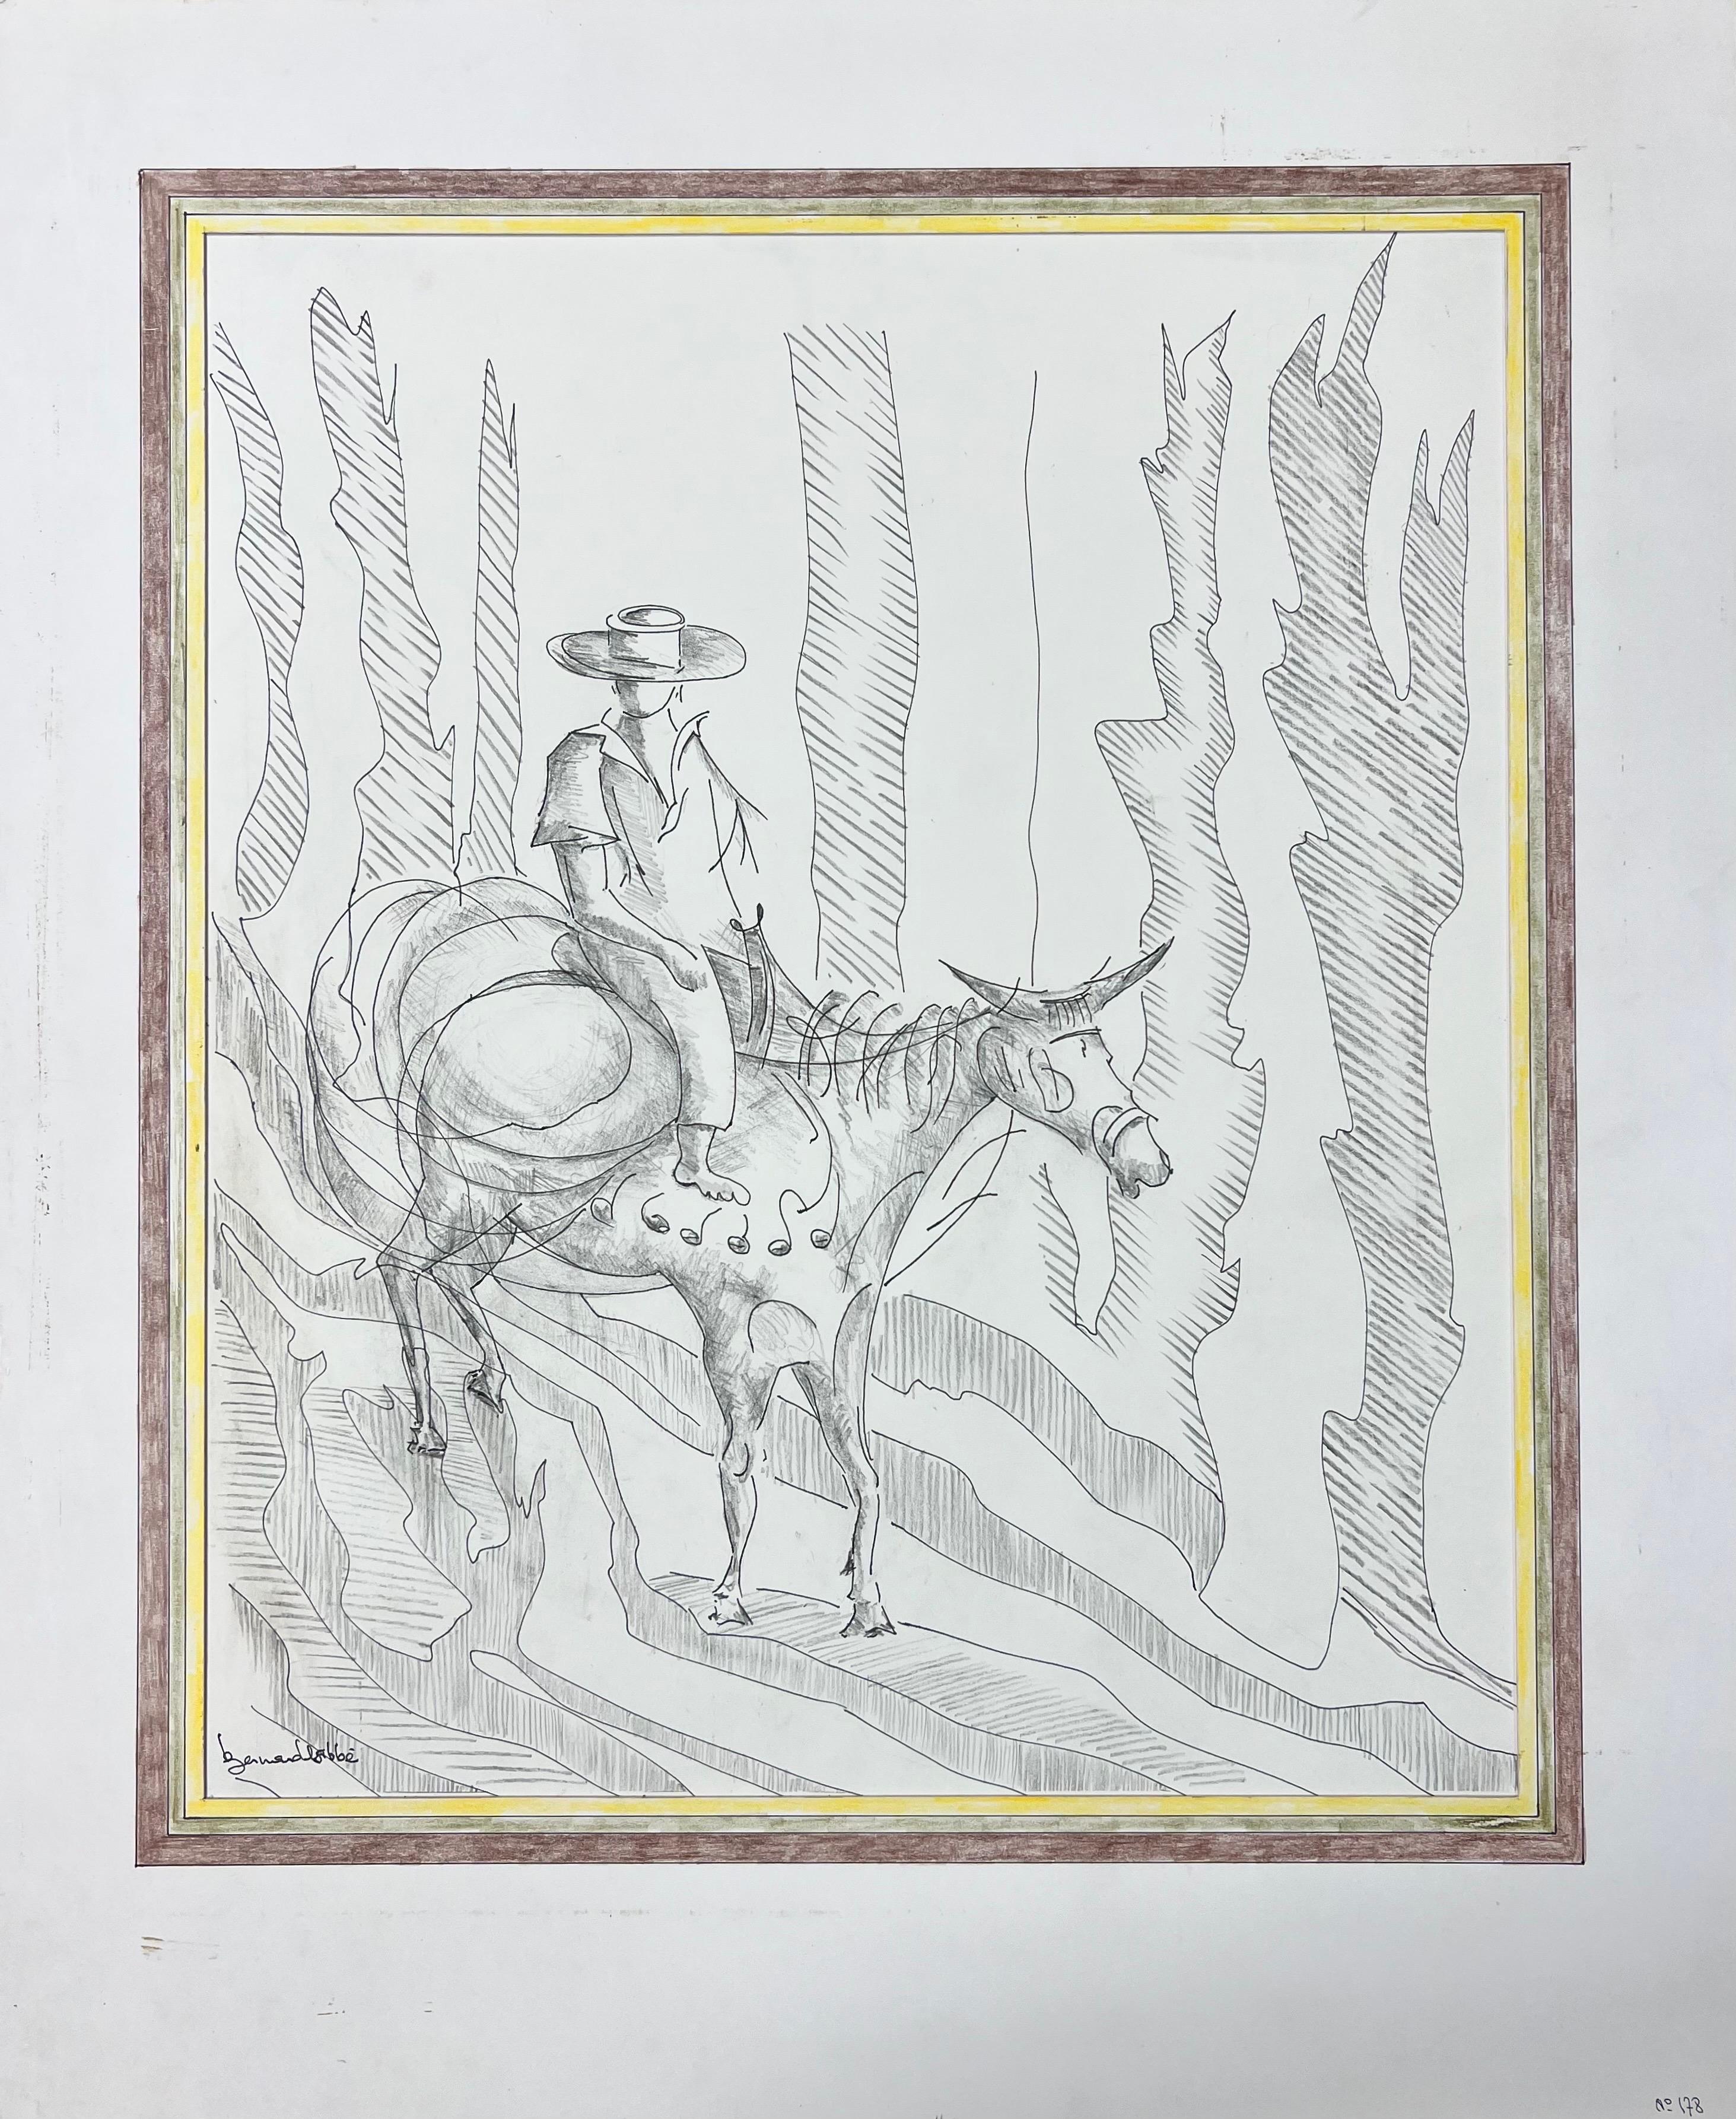 Bernard Labbe Animal Art - 1950's Modernist/ Cubist Painting - Horse and Cowboy Illustration